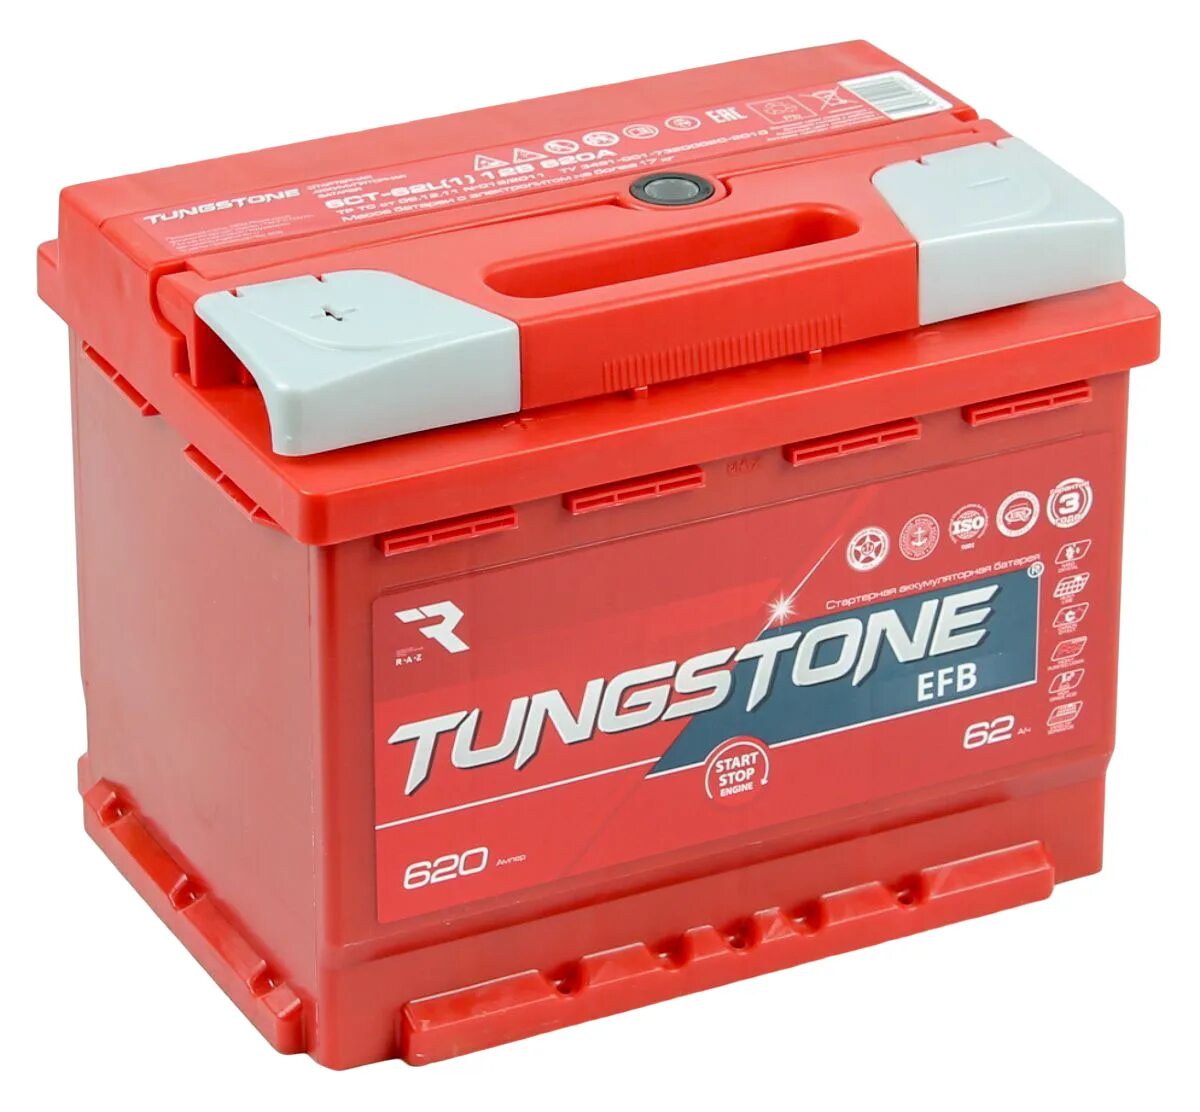 Tungstone аккумуляторы 60 Ач. EFB 6ct-60.0. Тунгстоне АКБ 65. 190 Аккумулятор тунгстоне. Купить аккумулятор производств